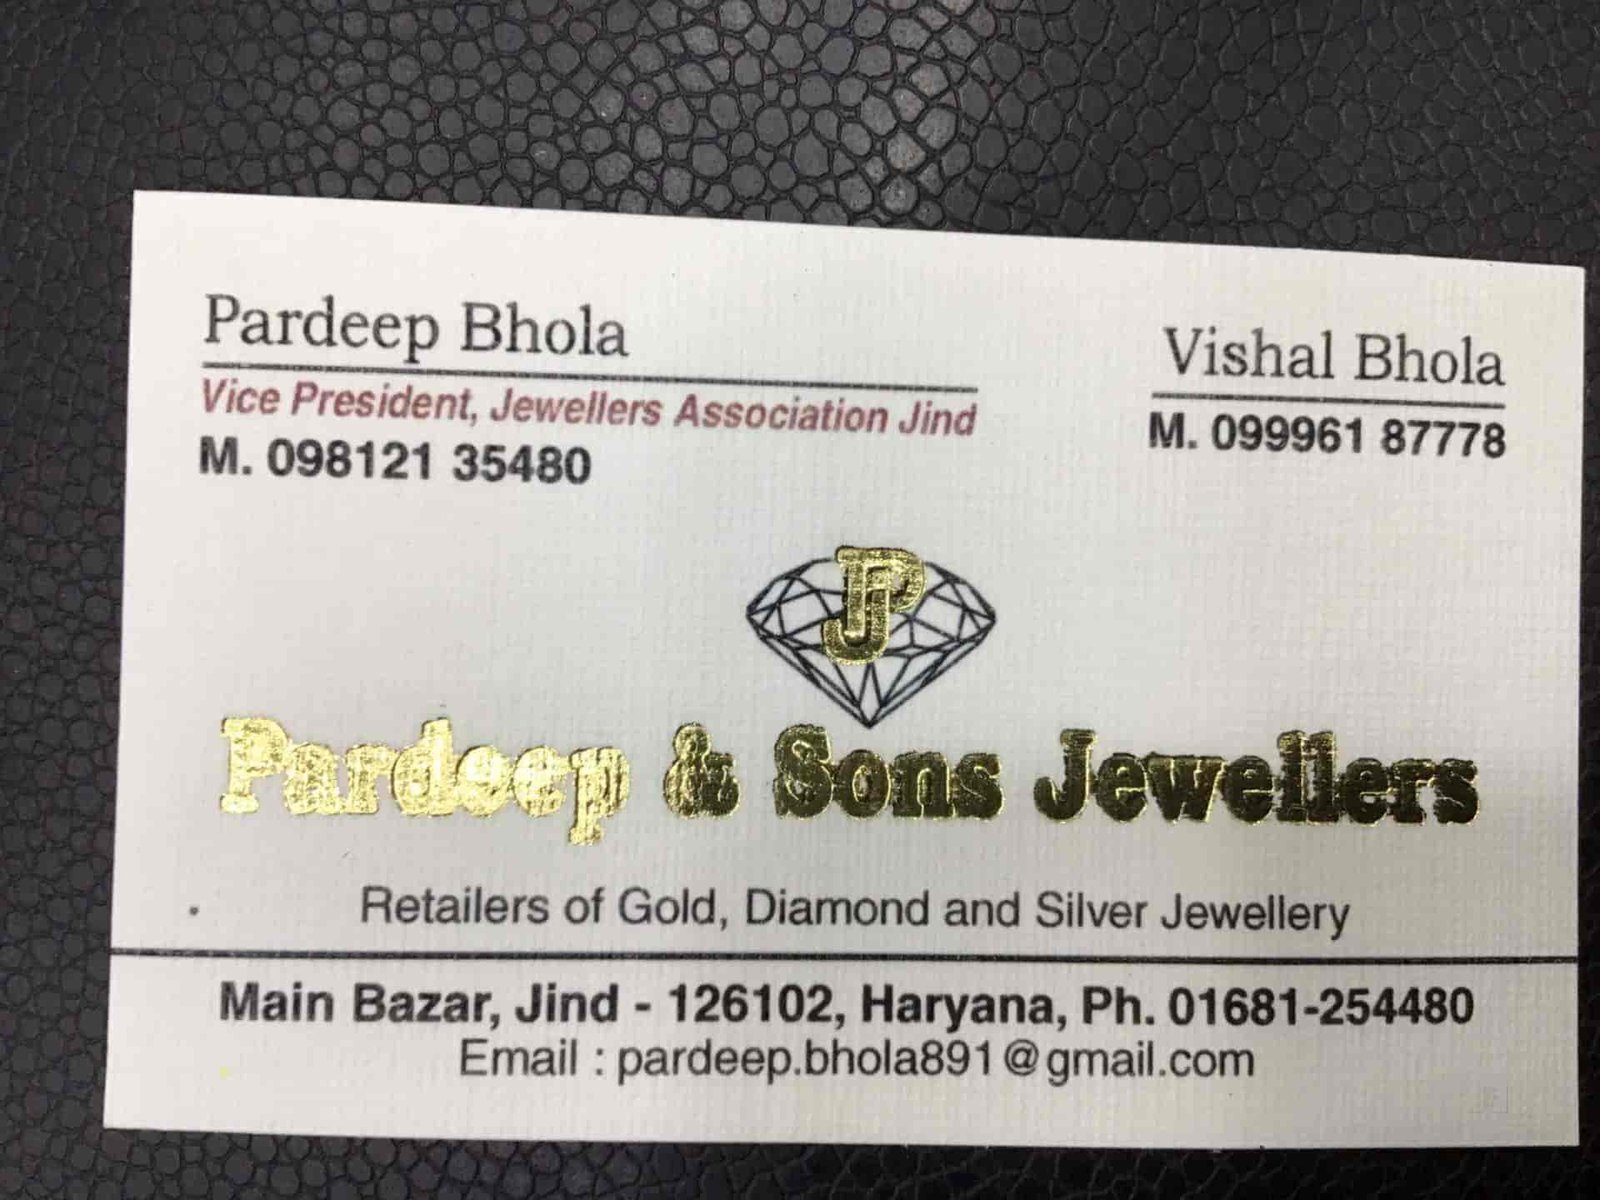 Purdeep & Sons Jewellers